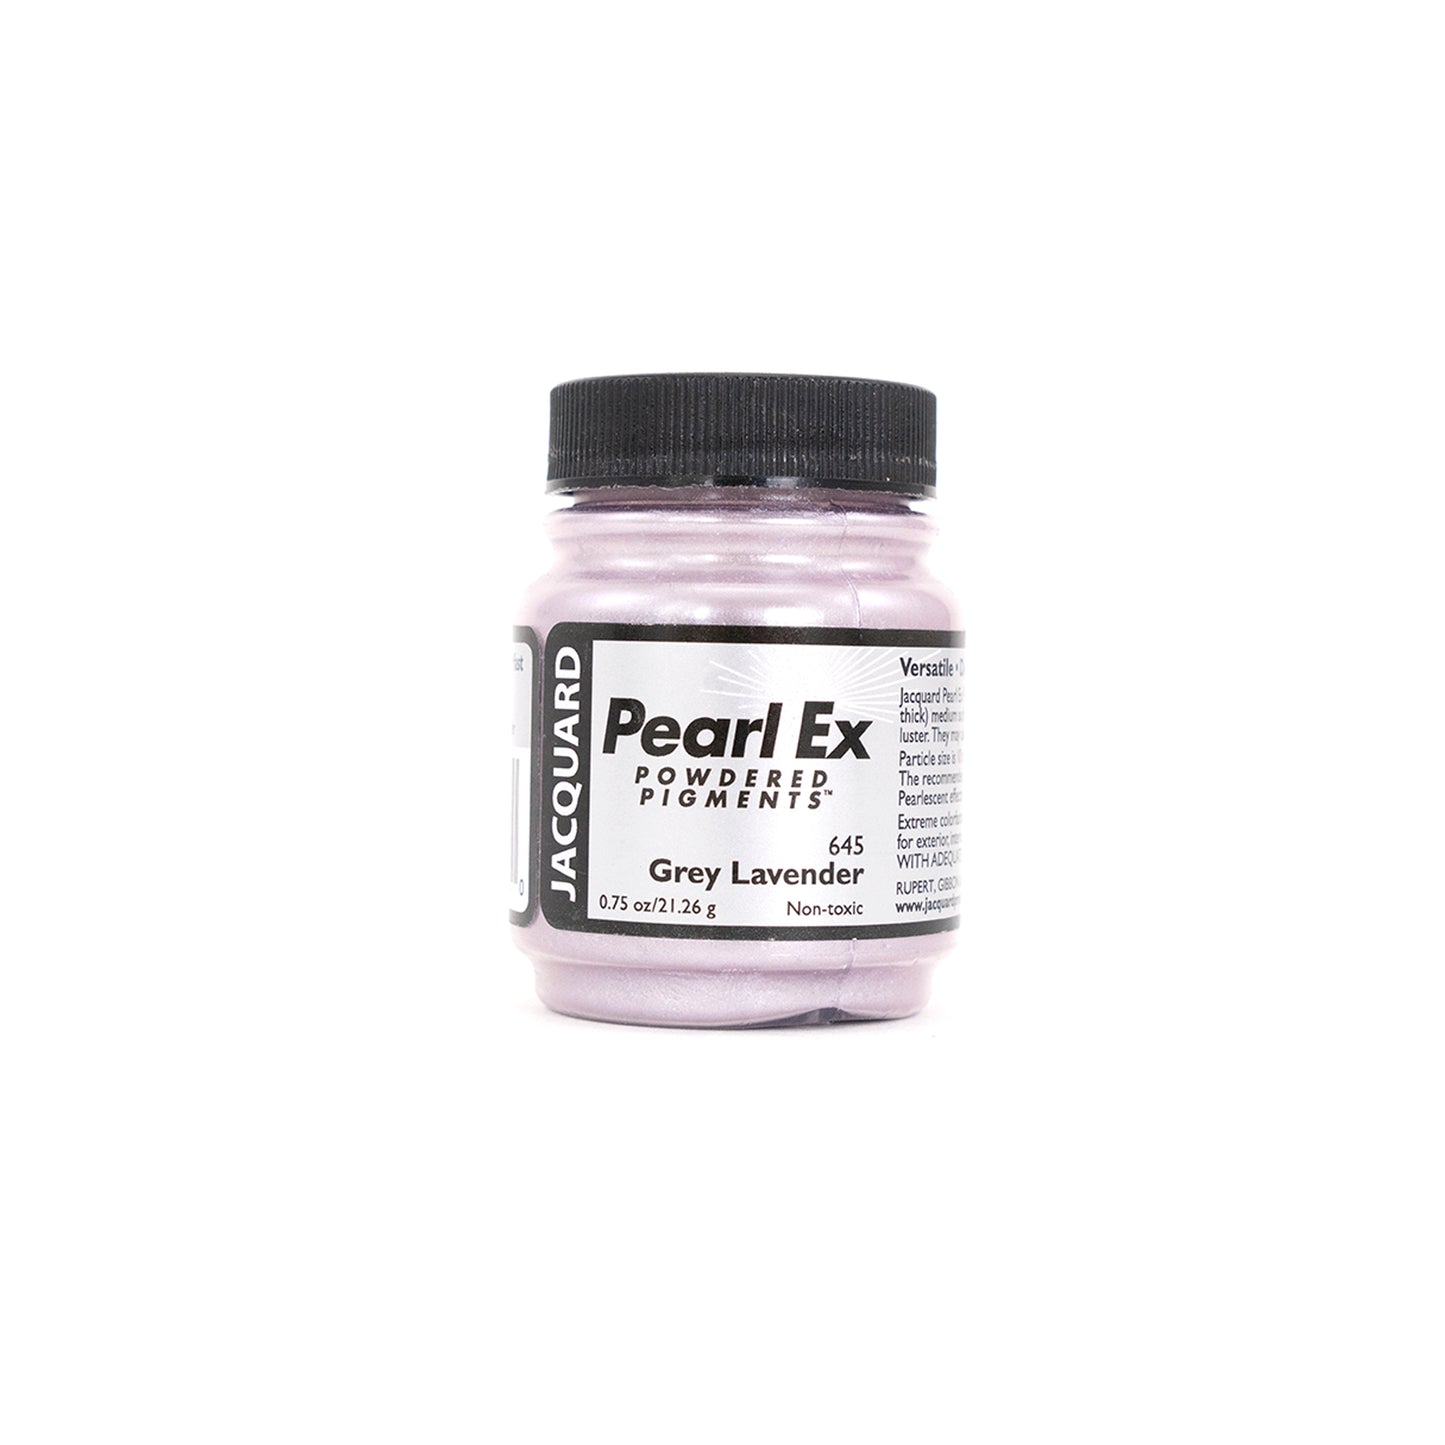 Jacquard PearlEx Powdered Pigments - 0.75 oz jars - Grey Lavender by Jacquard - K. A. Artist Shop